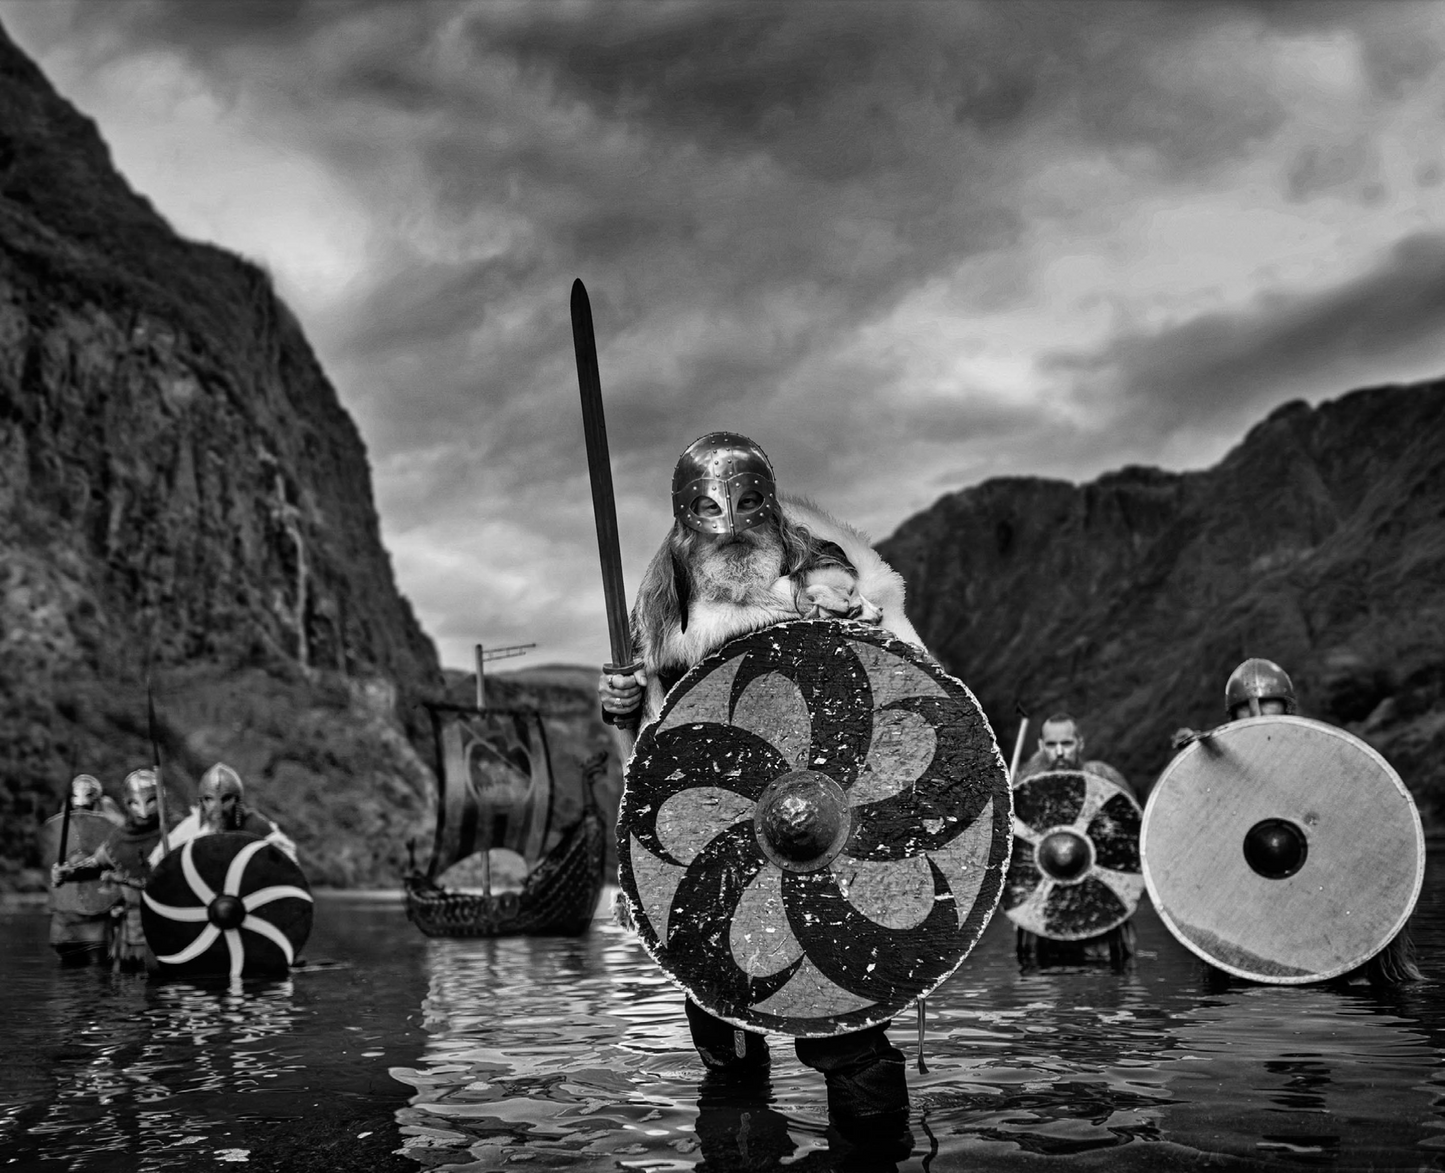 Vikings-Photographic Print-David Yarrow-Sorrel Sky Gallery